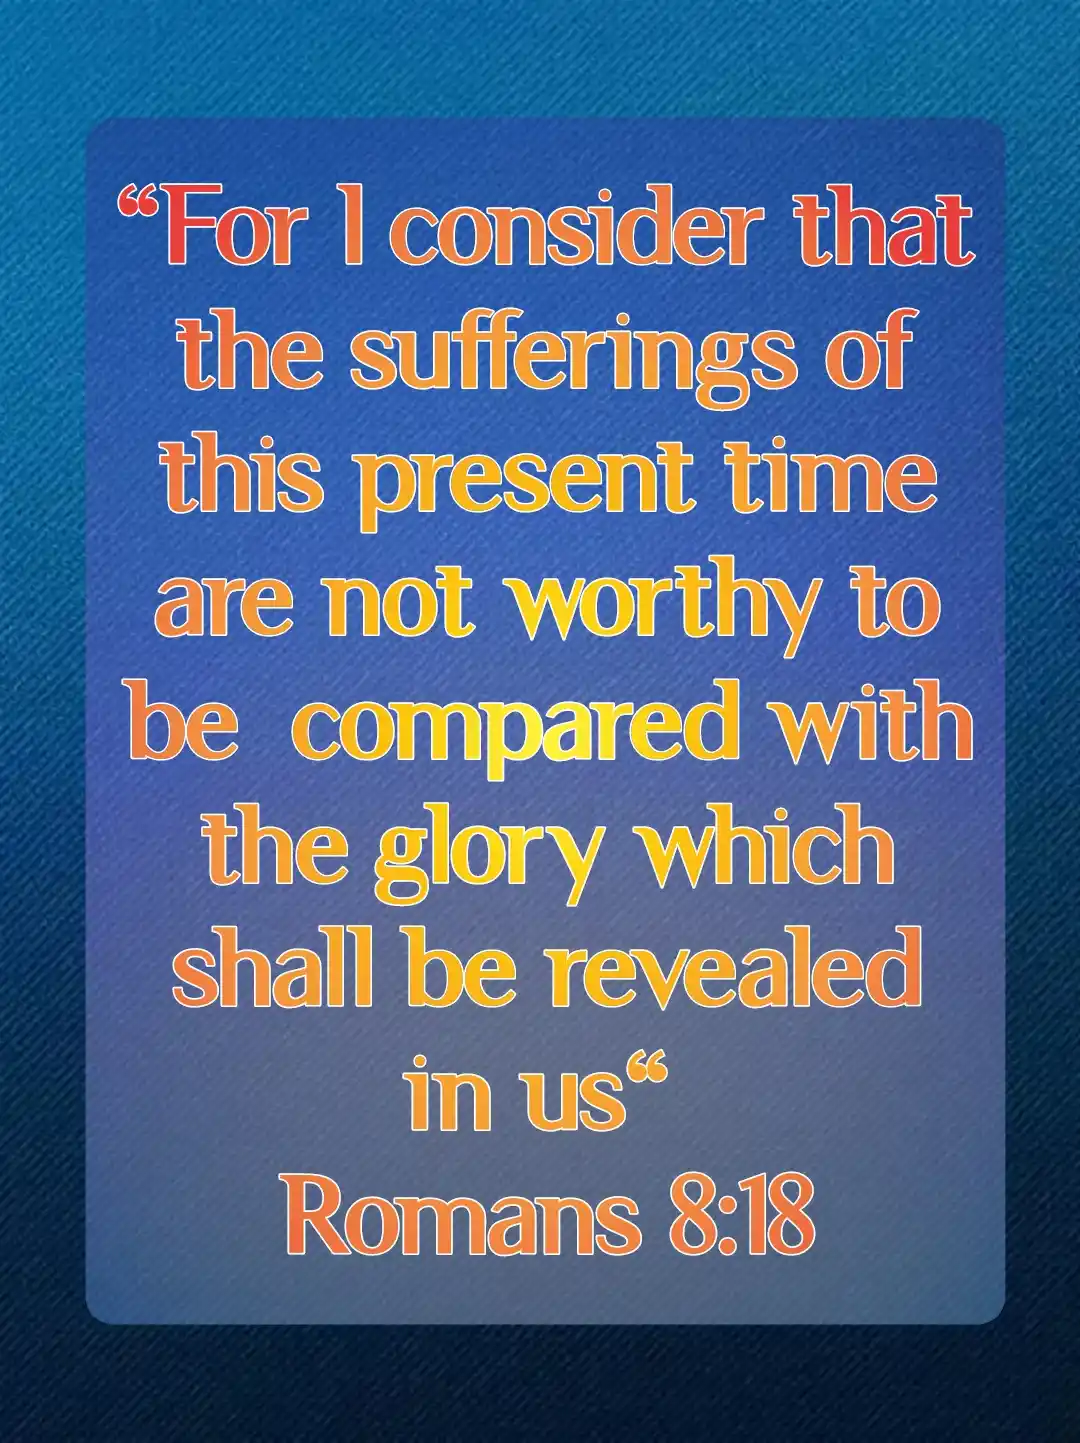 Bible Verse About Job Suffering (Romans 8:18)